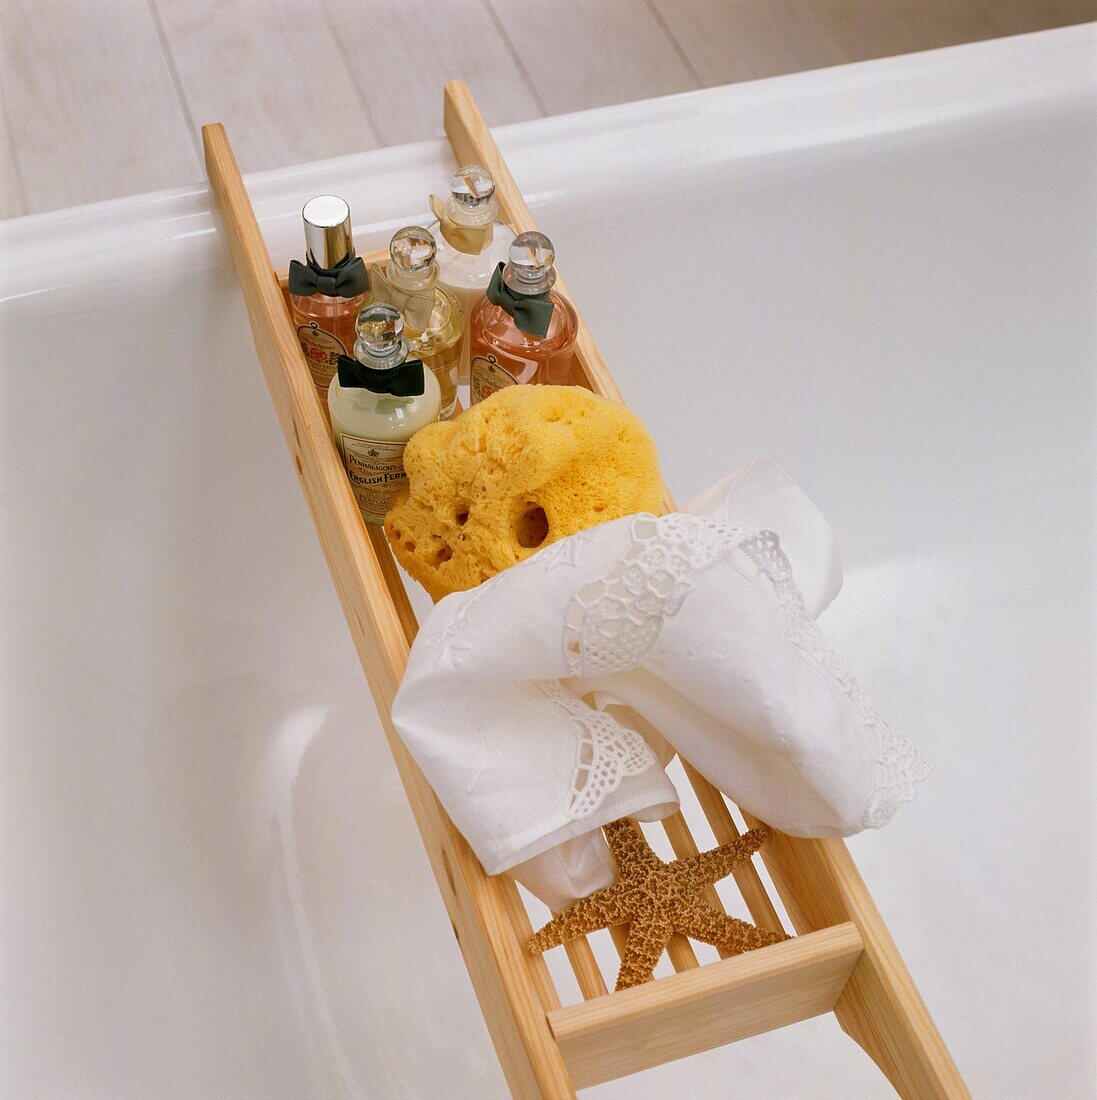 Toiletries and sponge with starfish on bath rack